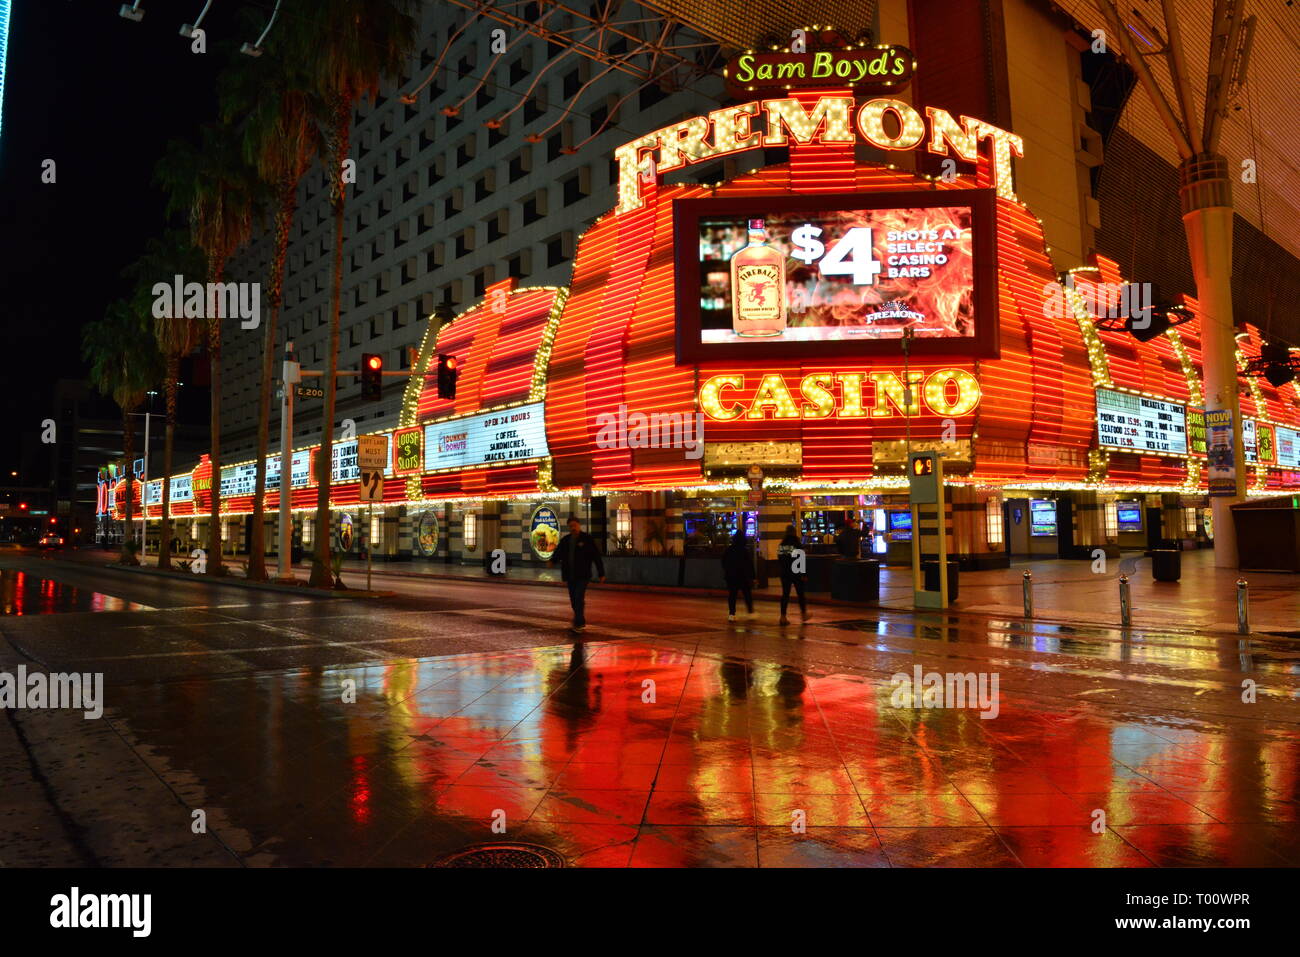 Fremont street in Las Vegas Stock Photo